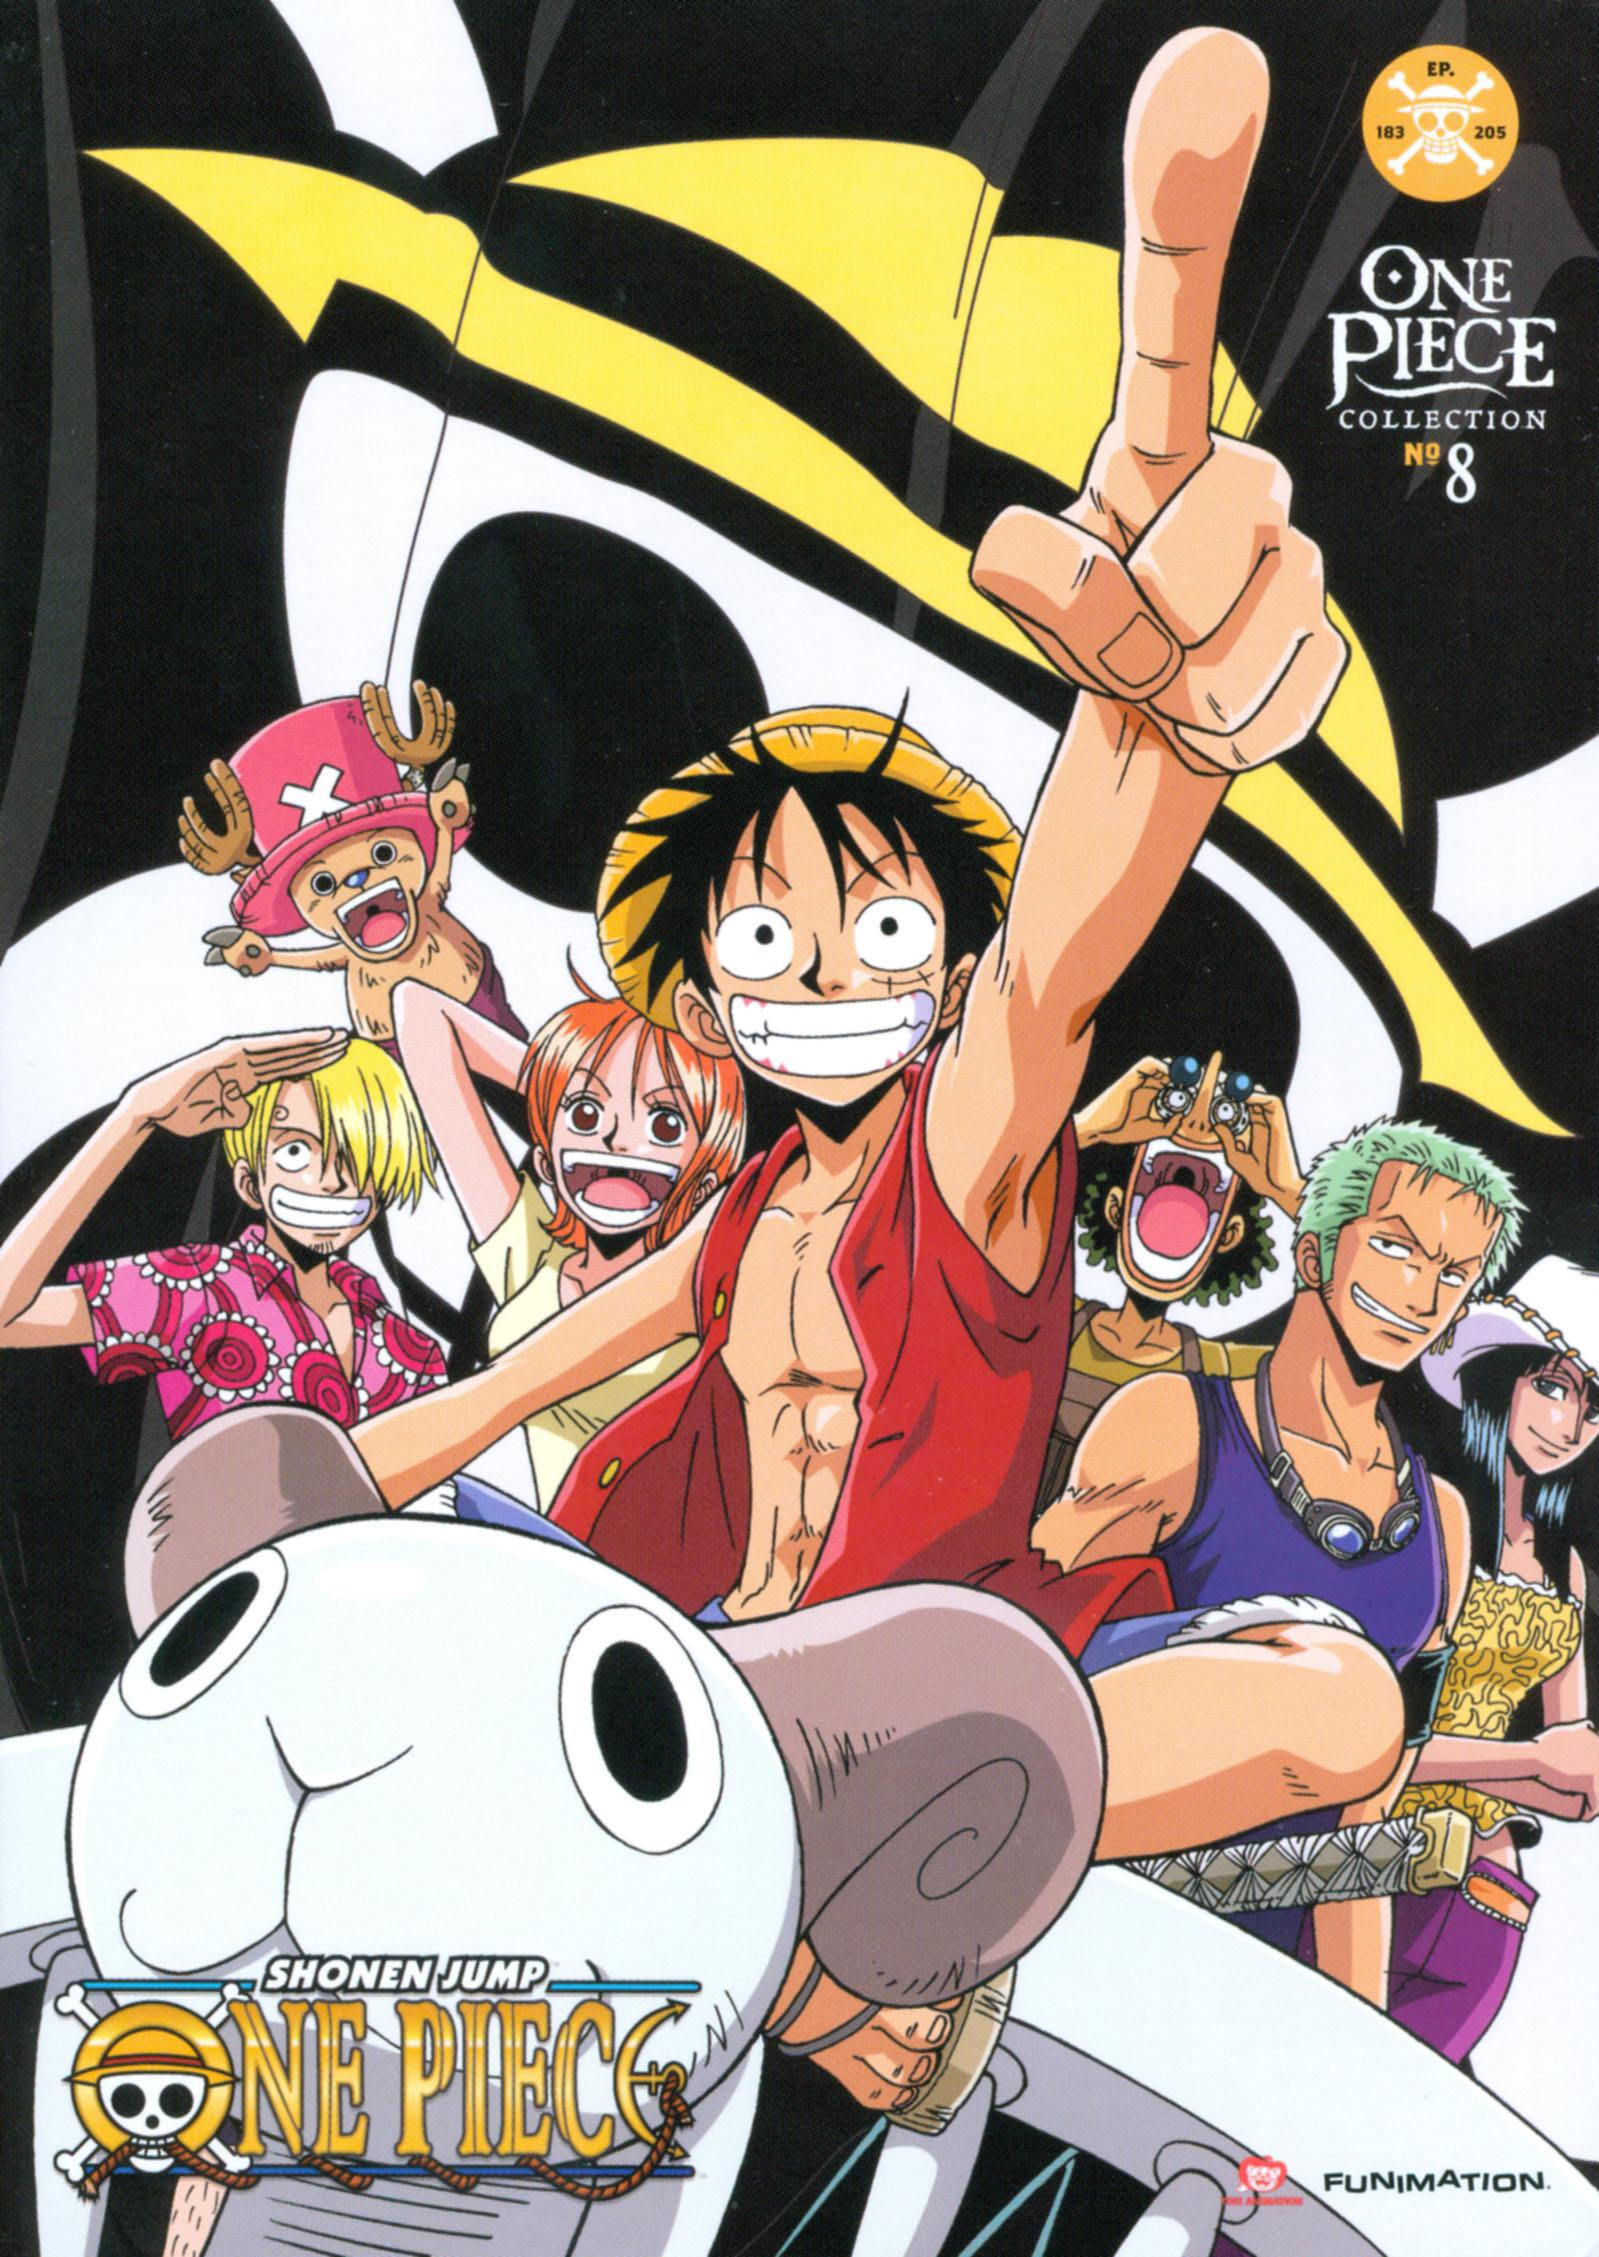 One Piece Season 11 Part 4 BLURAY/DVD SET (Eps # 668-680) (Uncut)